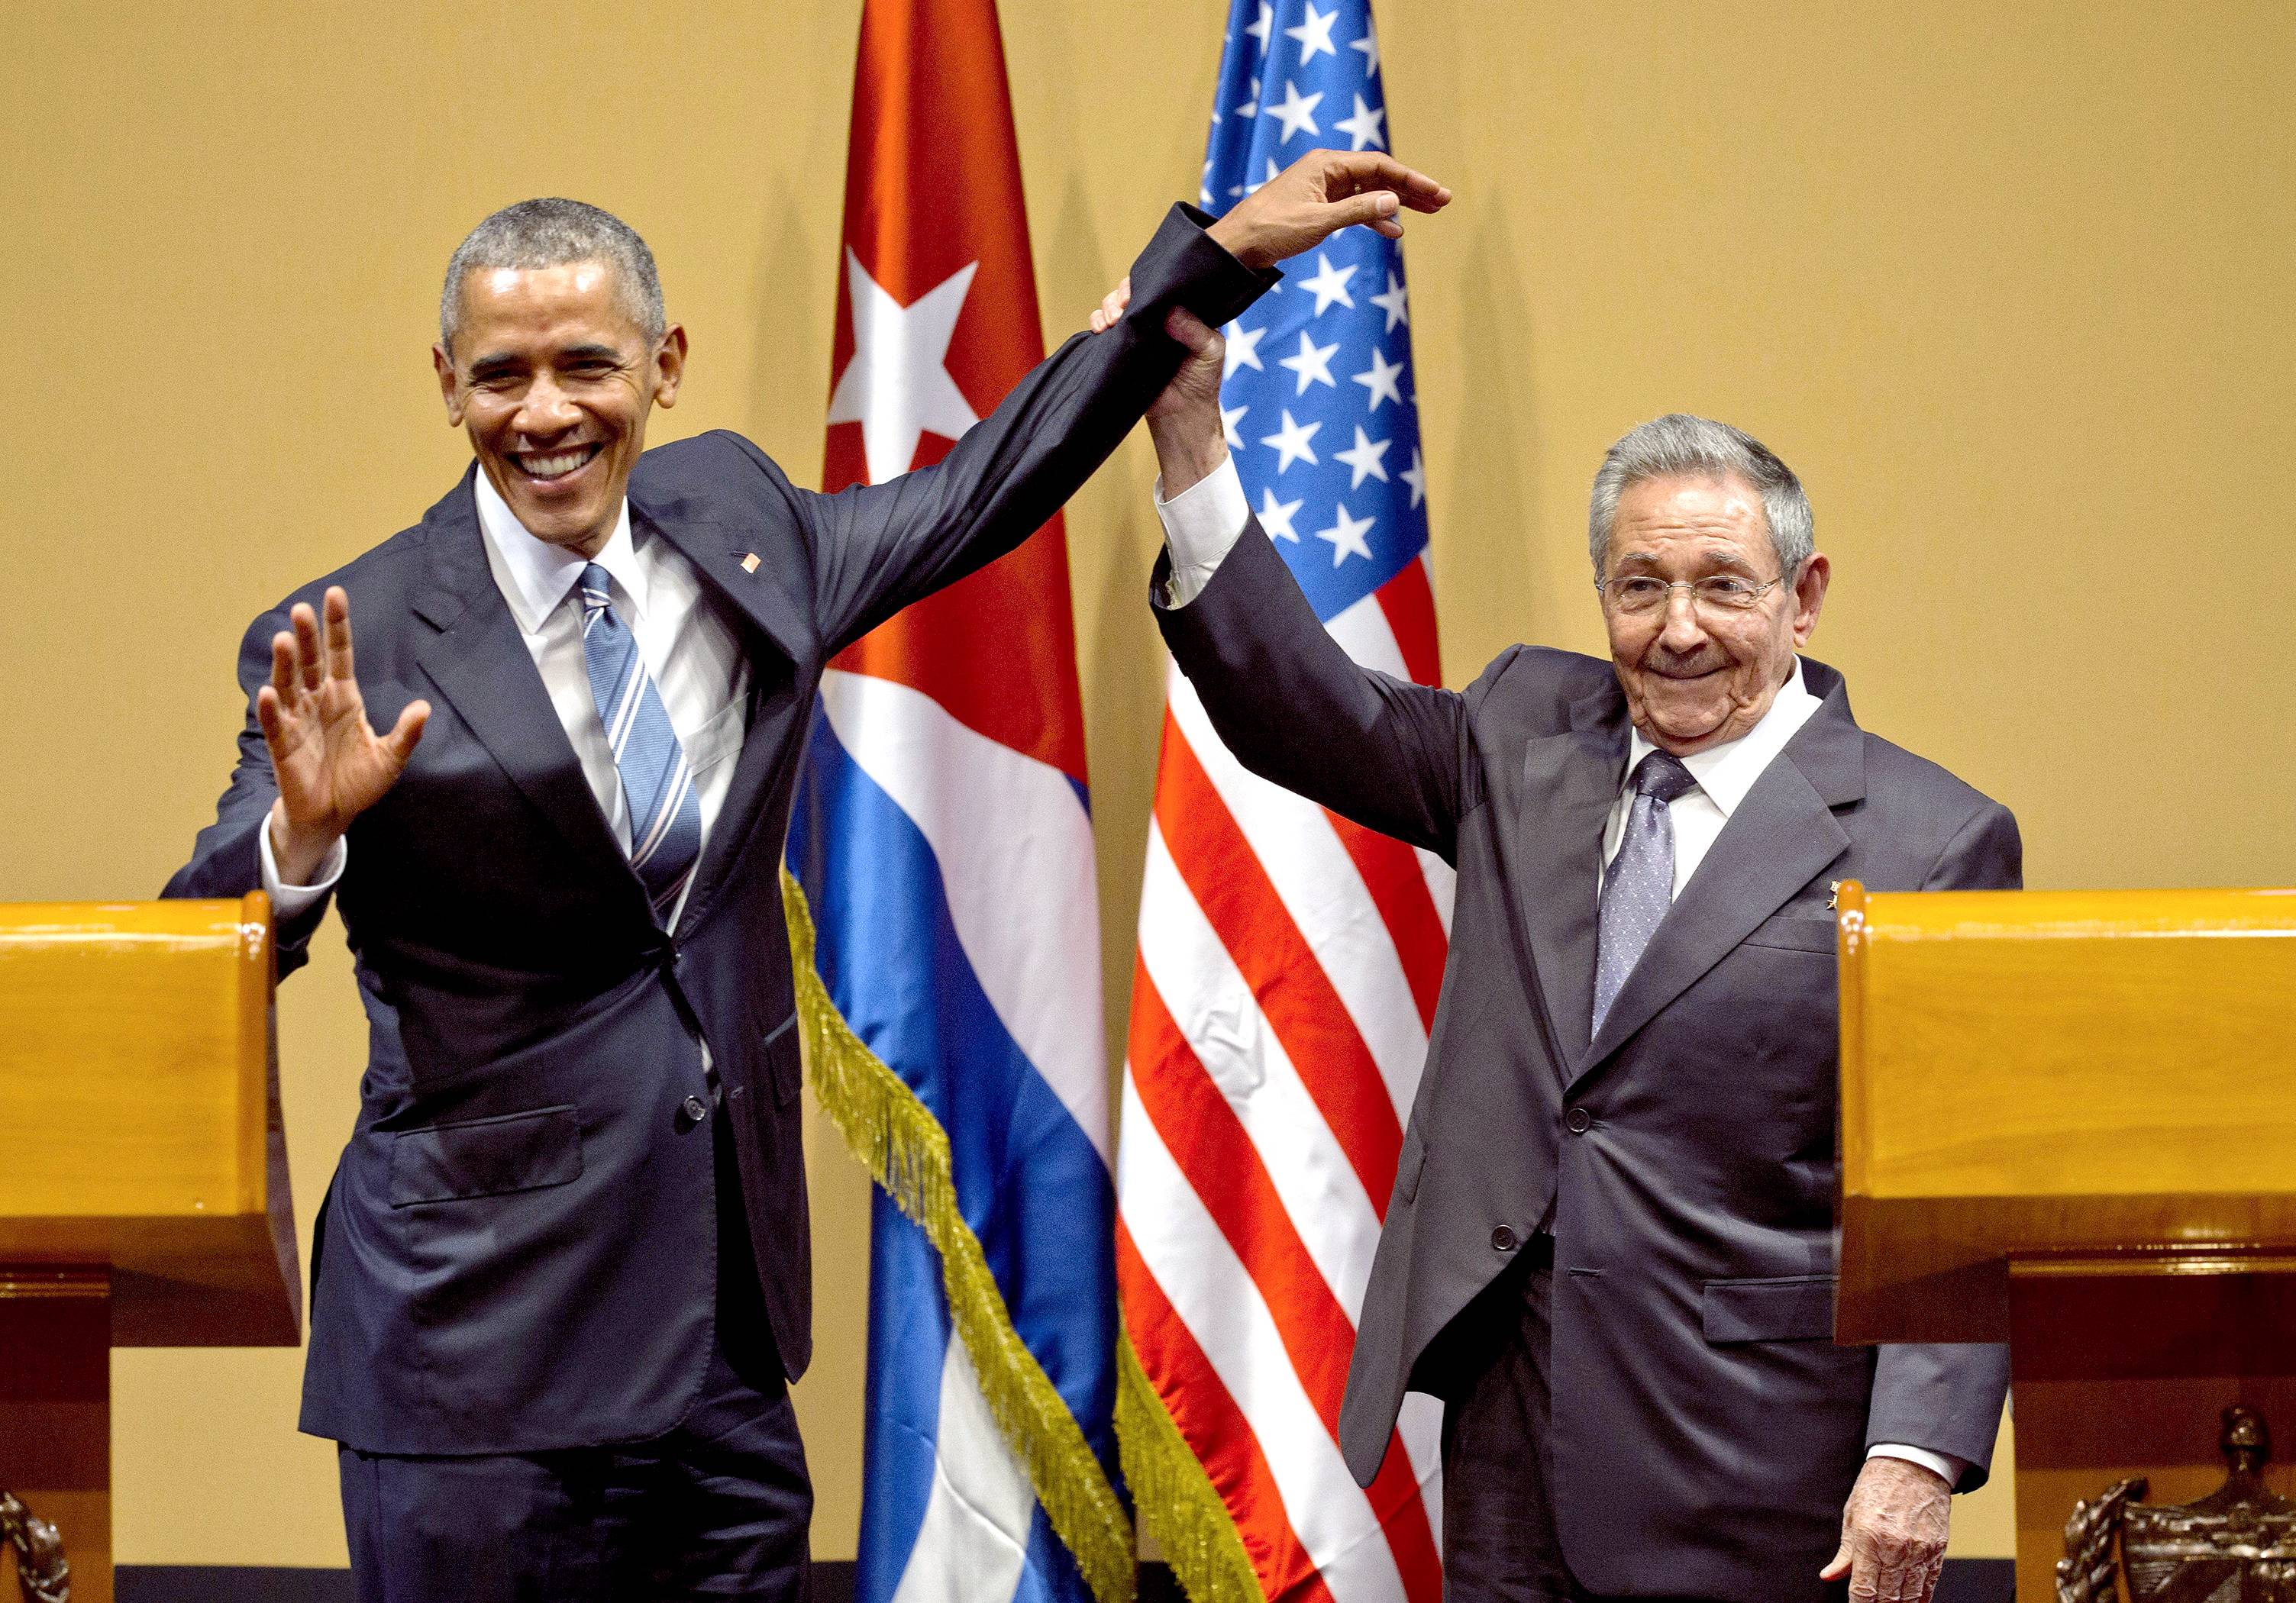 News, National News, Barack Obama, Raul Castro, Racism, Discrimination, Employment